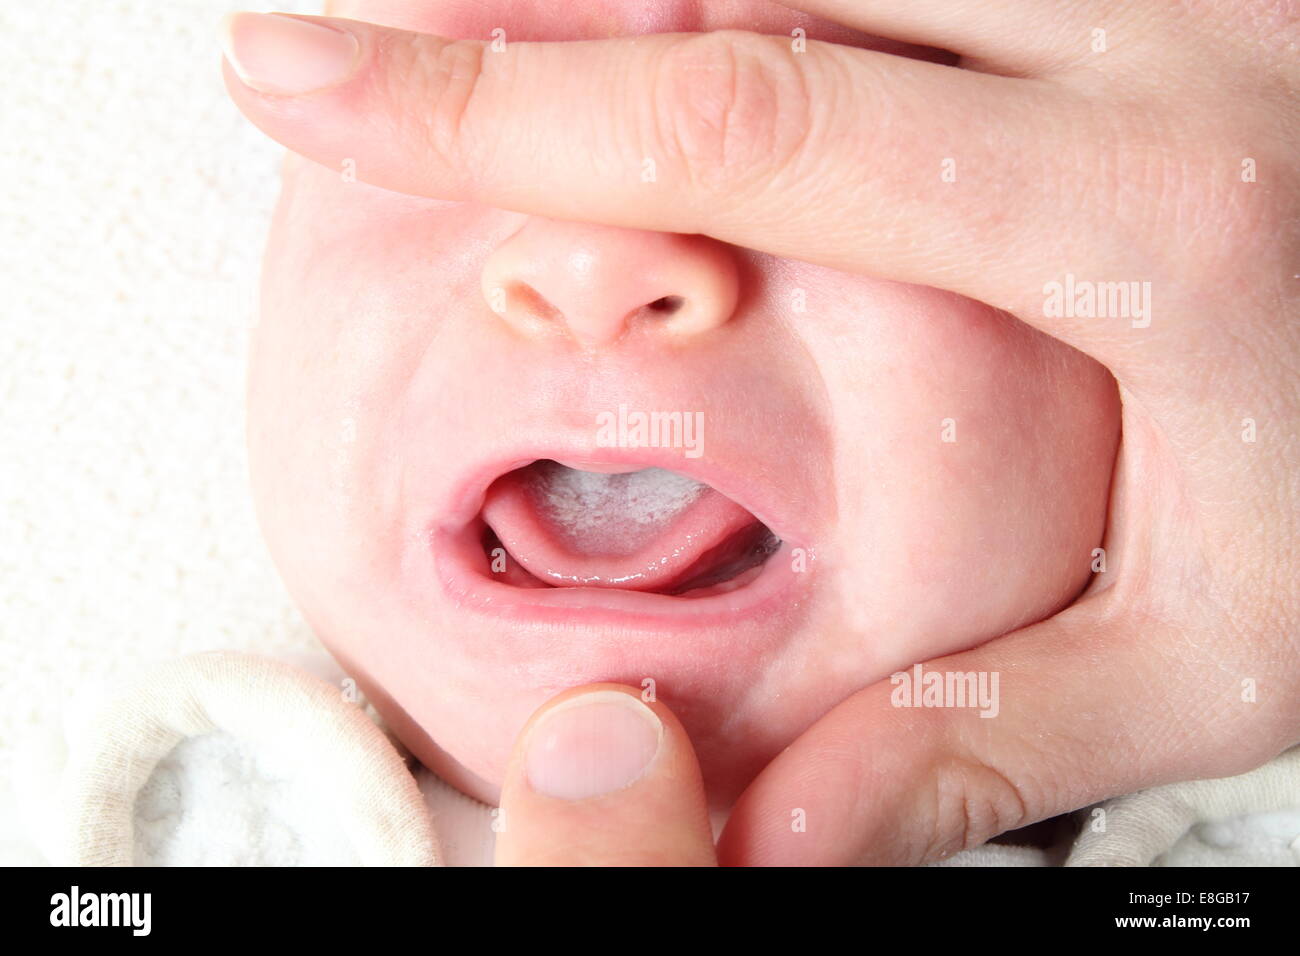 Oral thrush of a newborn baby Stock Photo